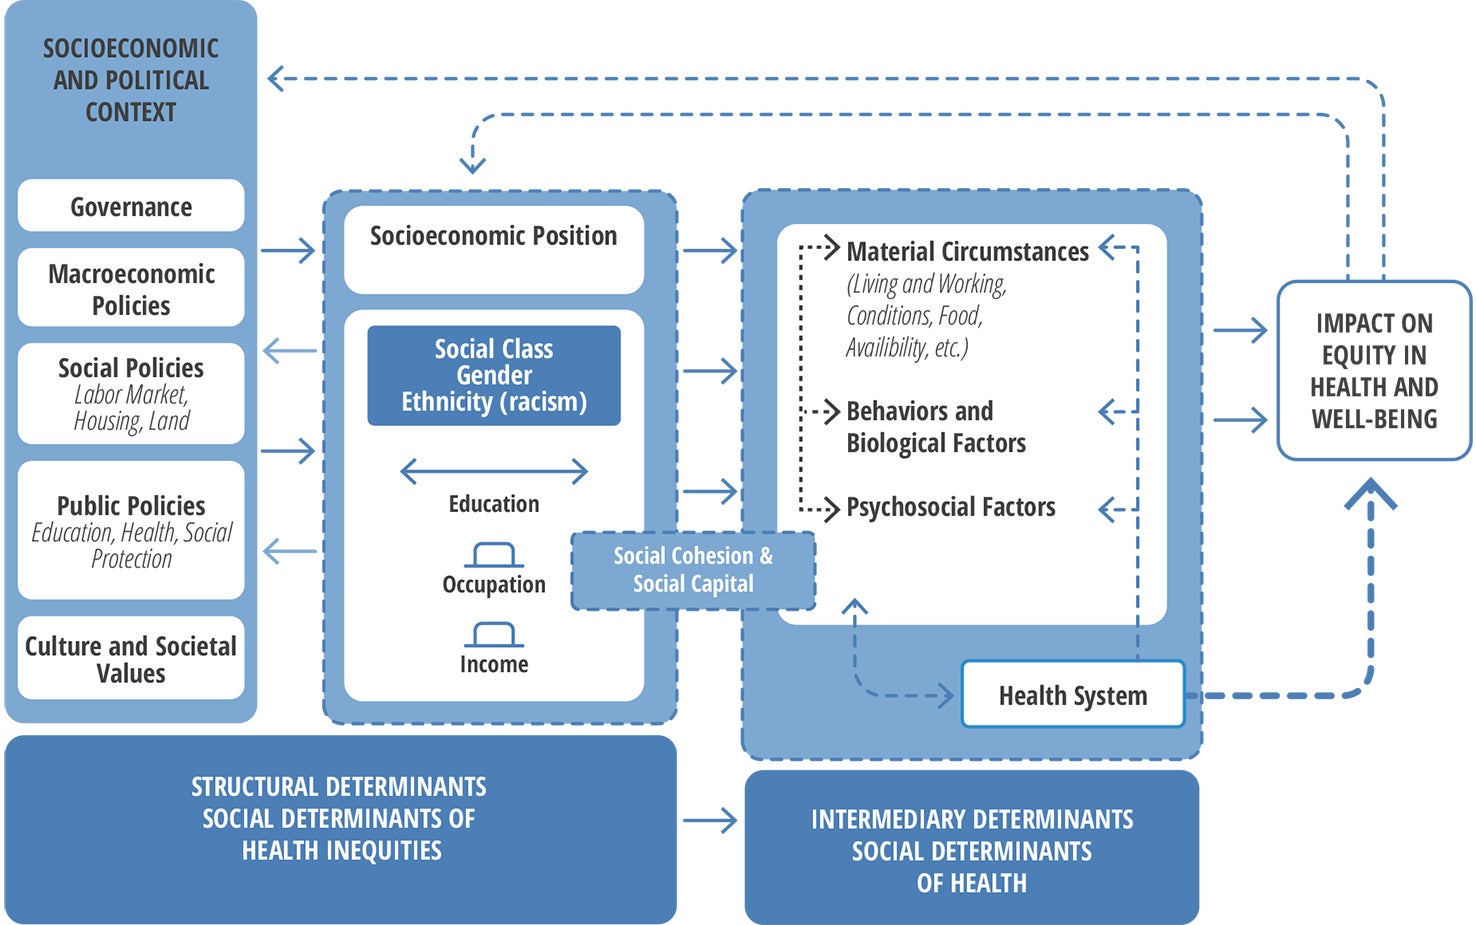 The social determinants of health